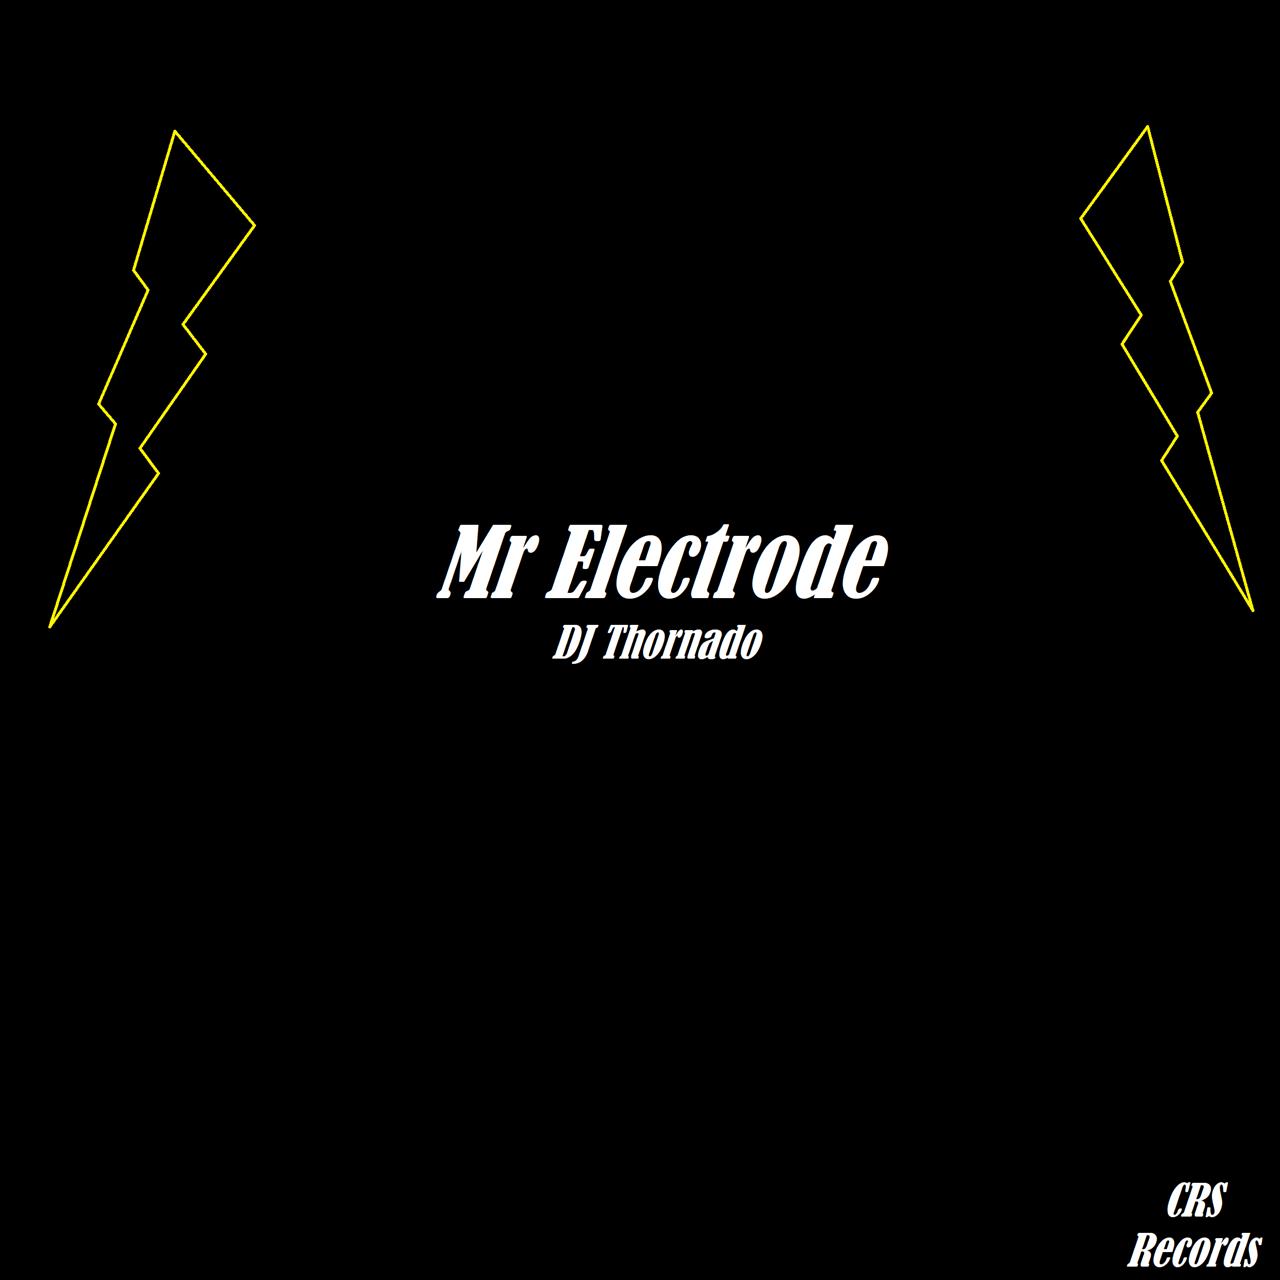 Mr Electrode - cover art